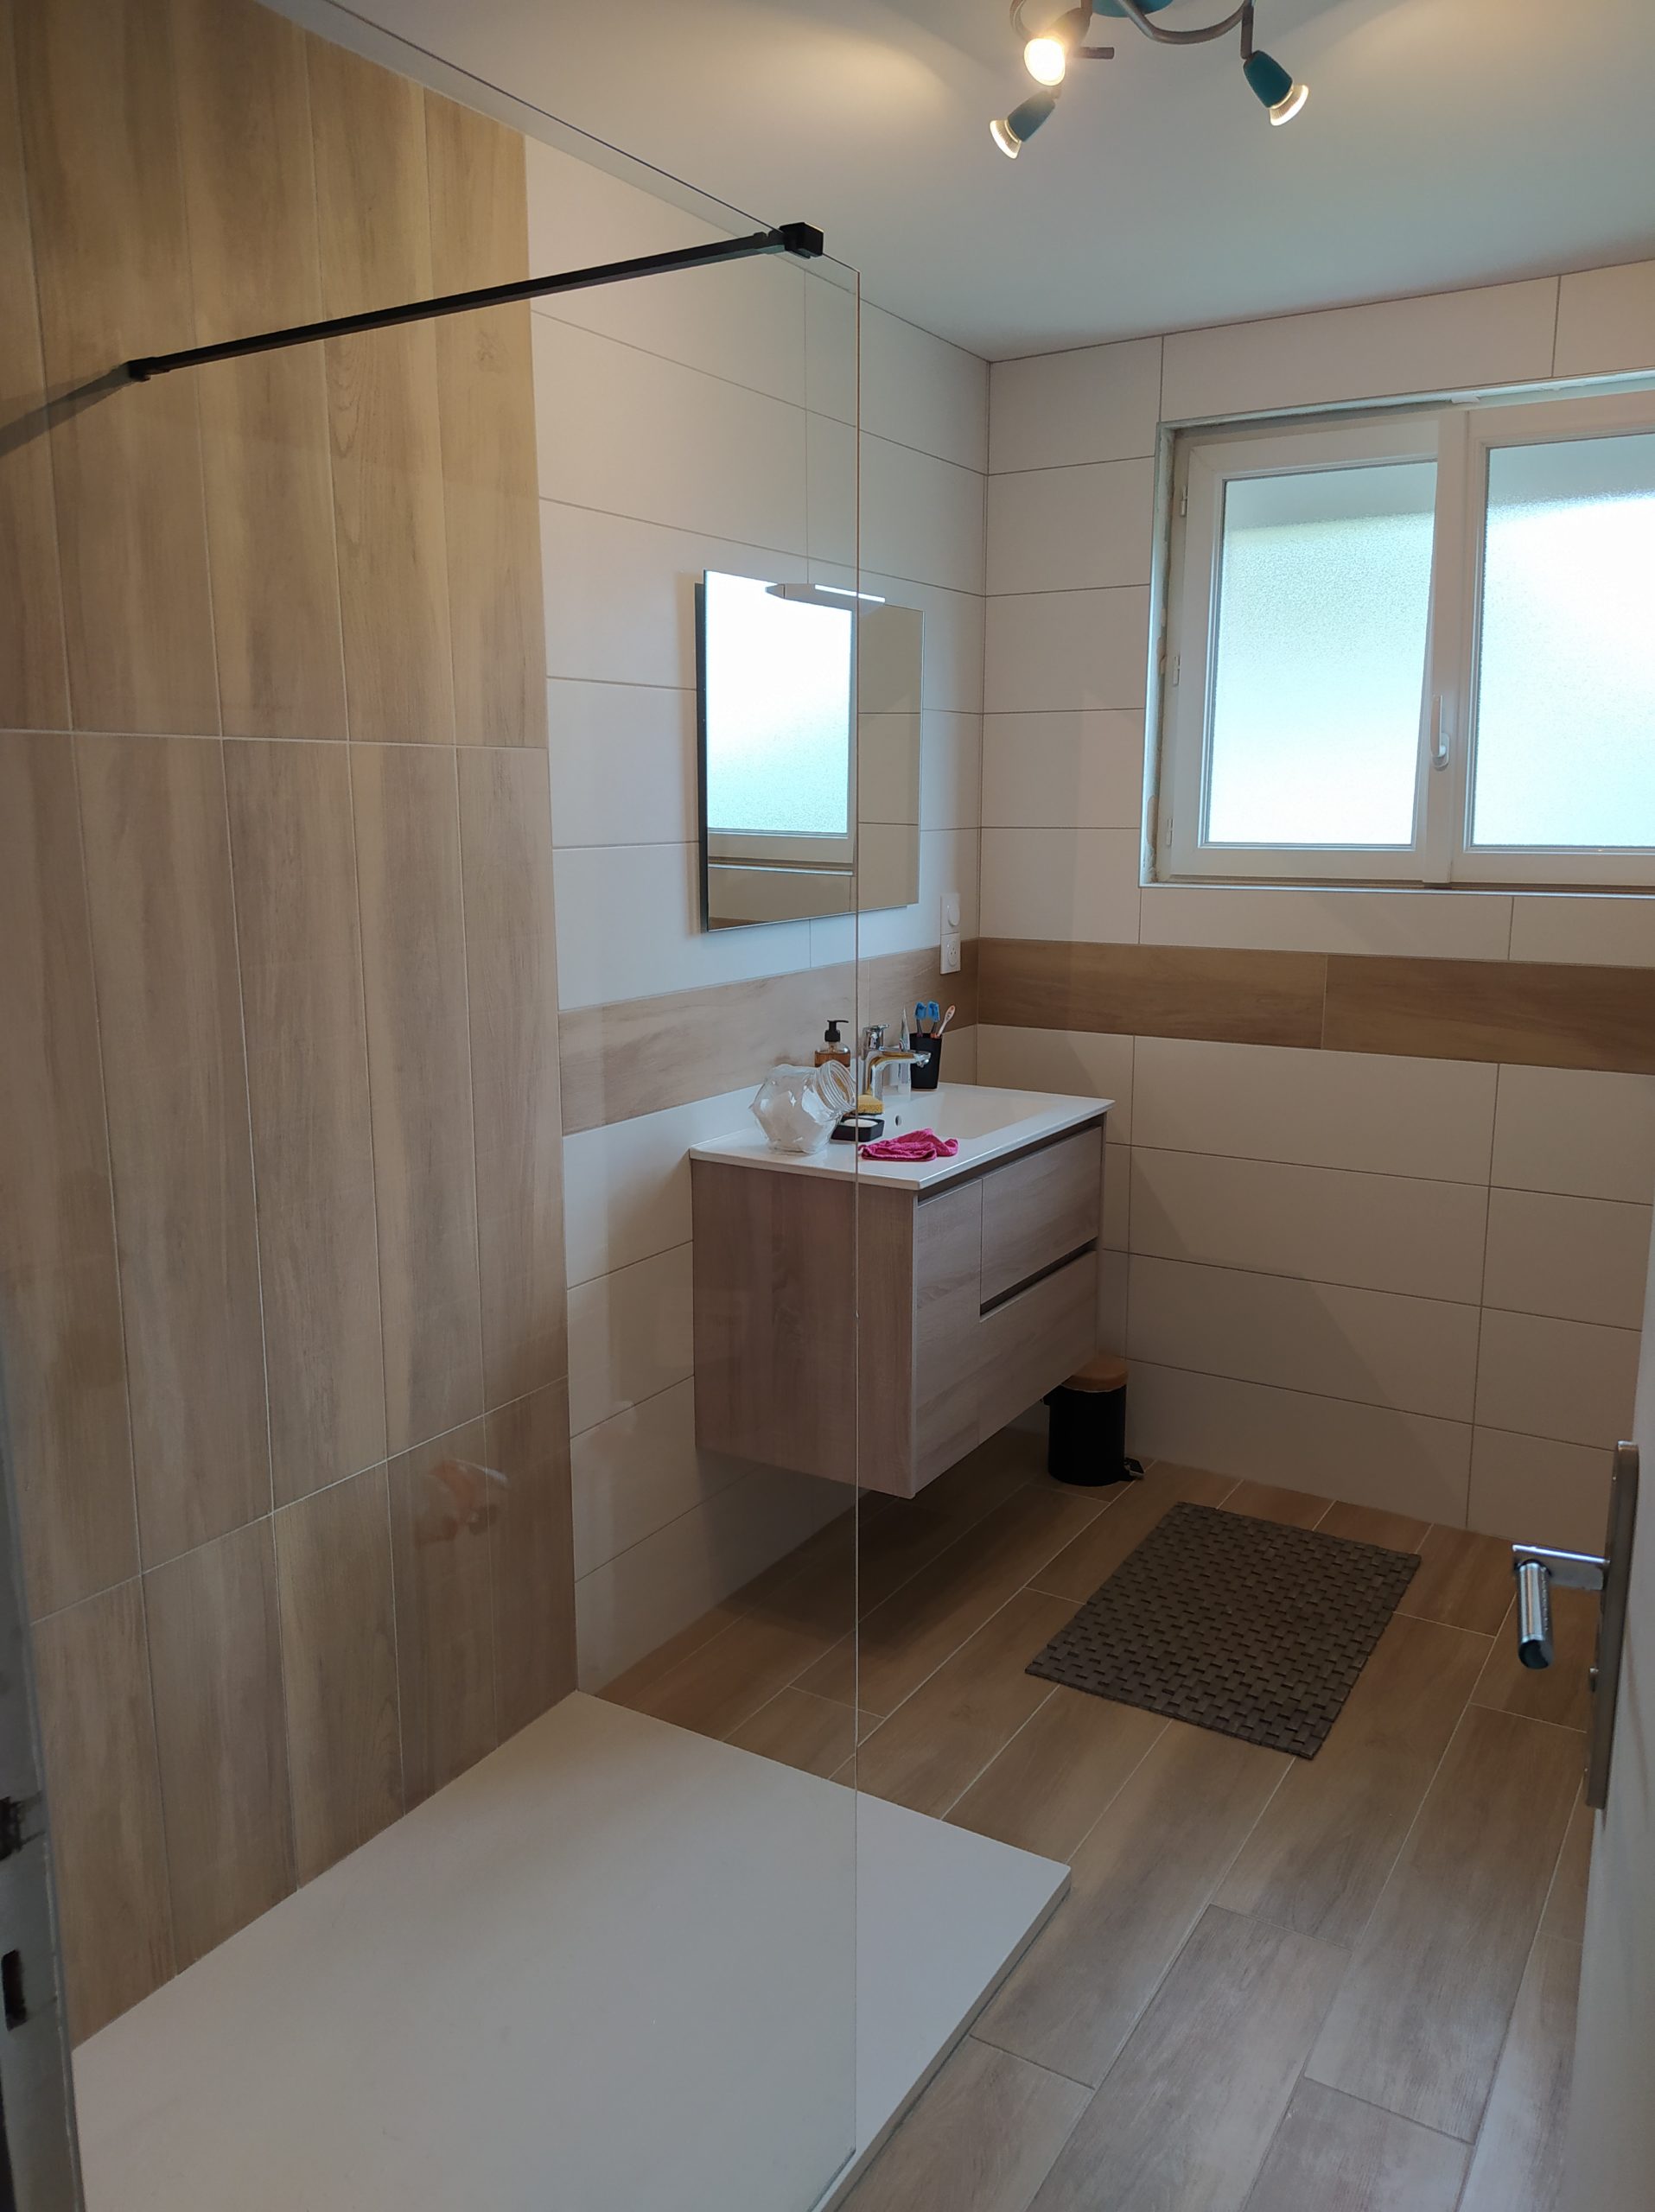 salle bain scandinave bois minimaliste douche